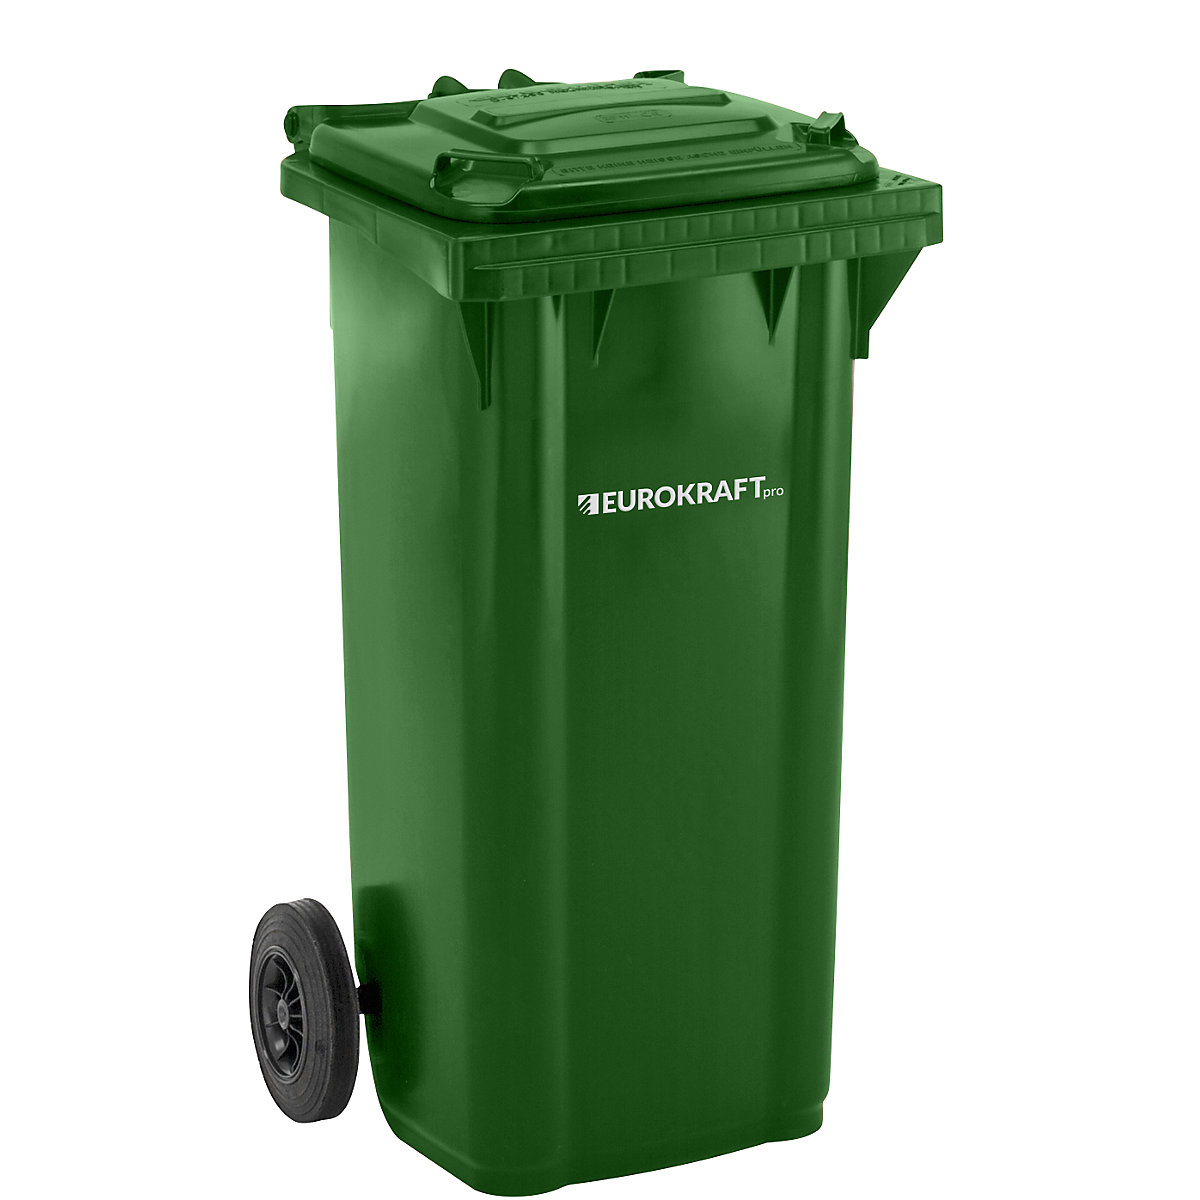 Contentor de lixo em plástico DIN EN 840 – eurokraft pro, volume 120 l, LxAxP 505 x 1005 x 555 mm, verde-5